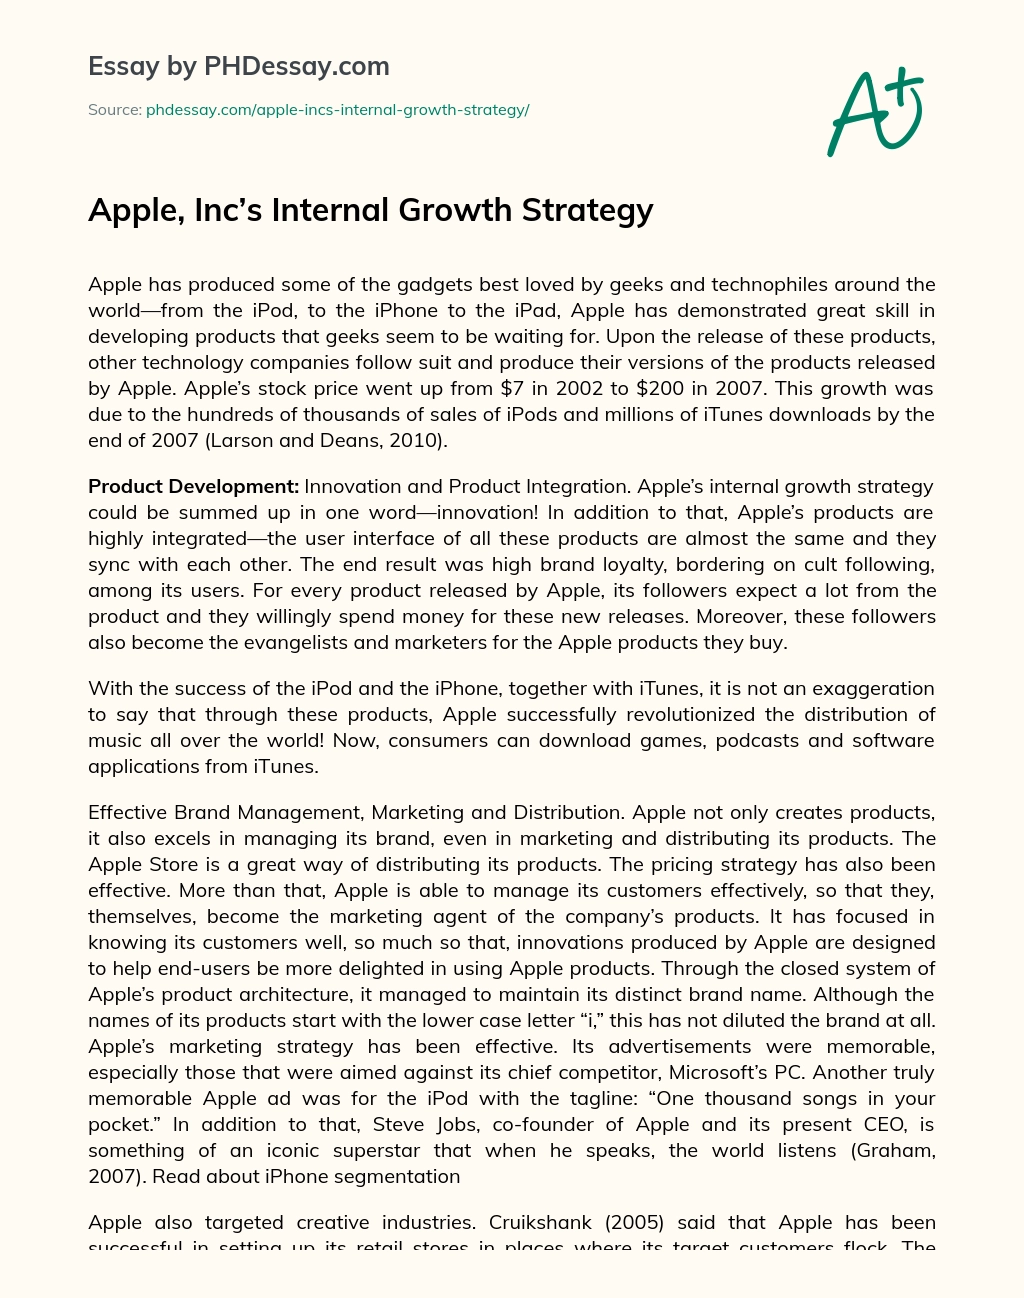 Apple, Inc’s Internal Growth Strategy essay